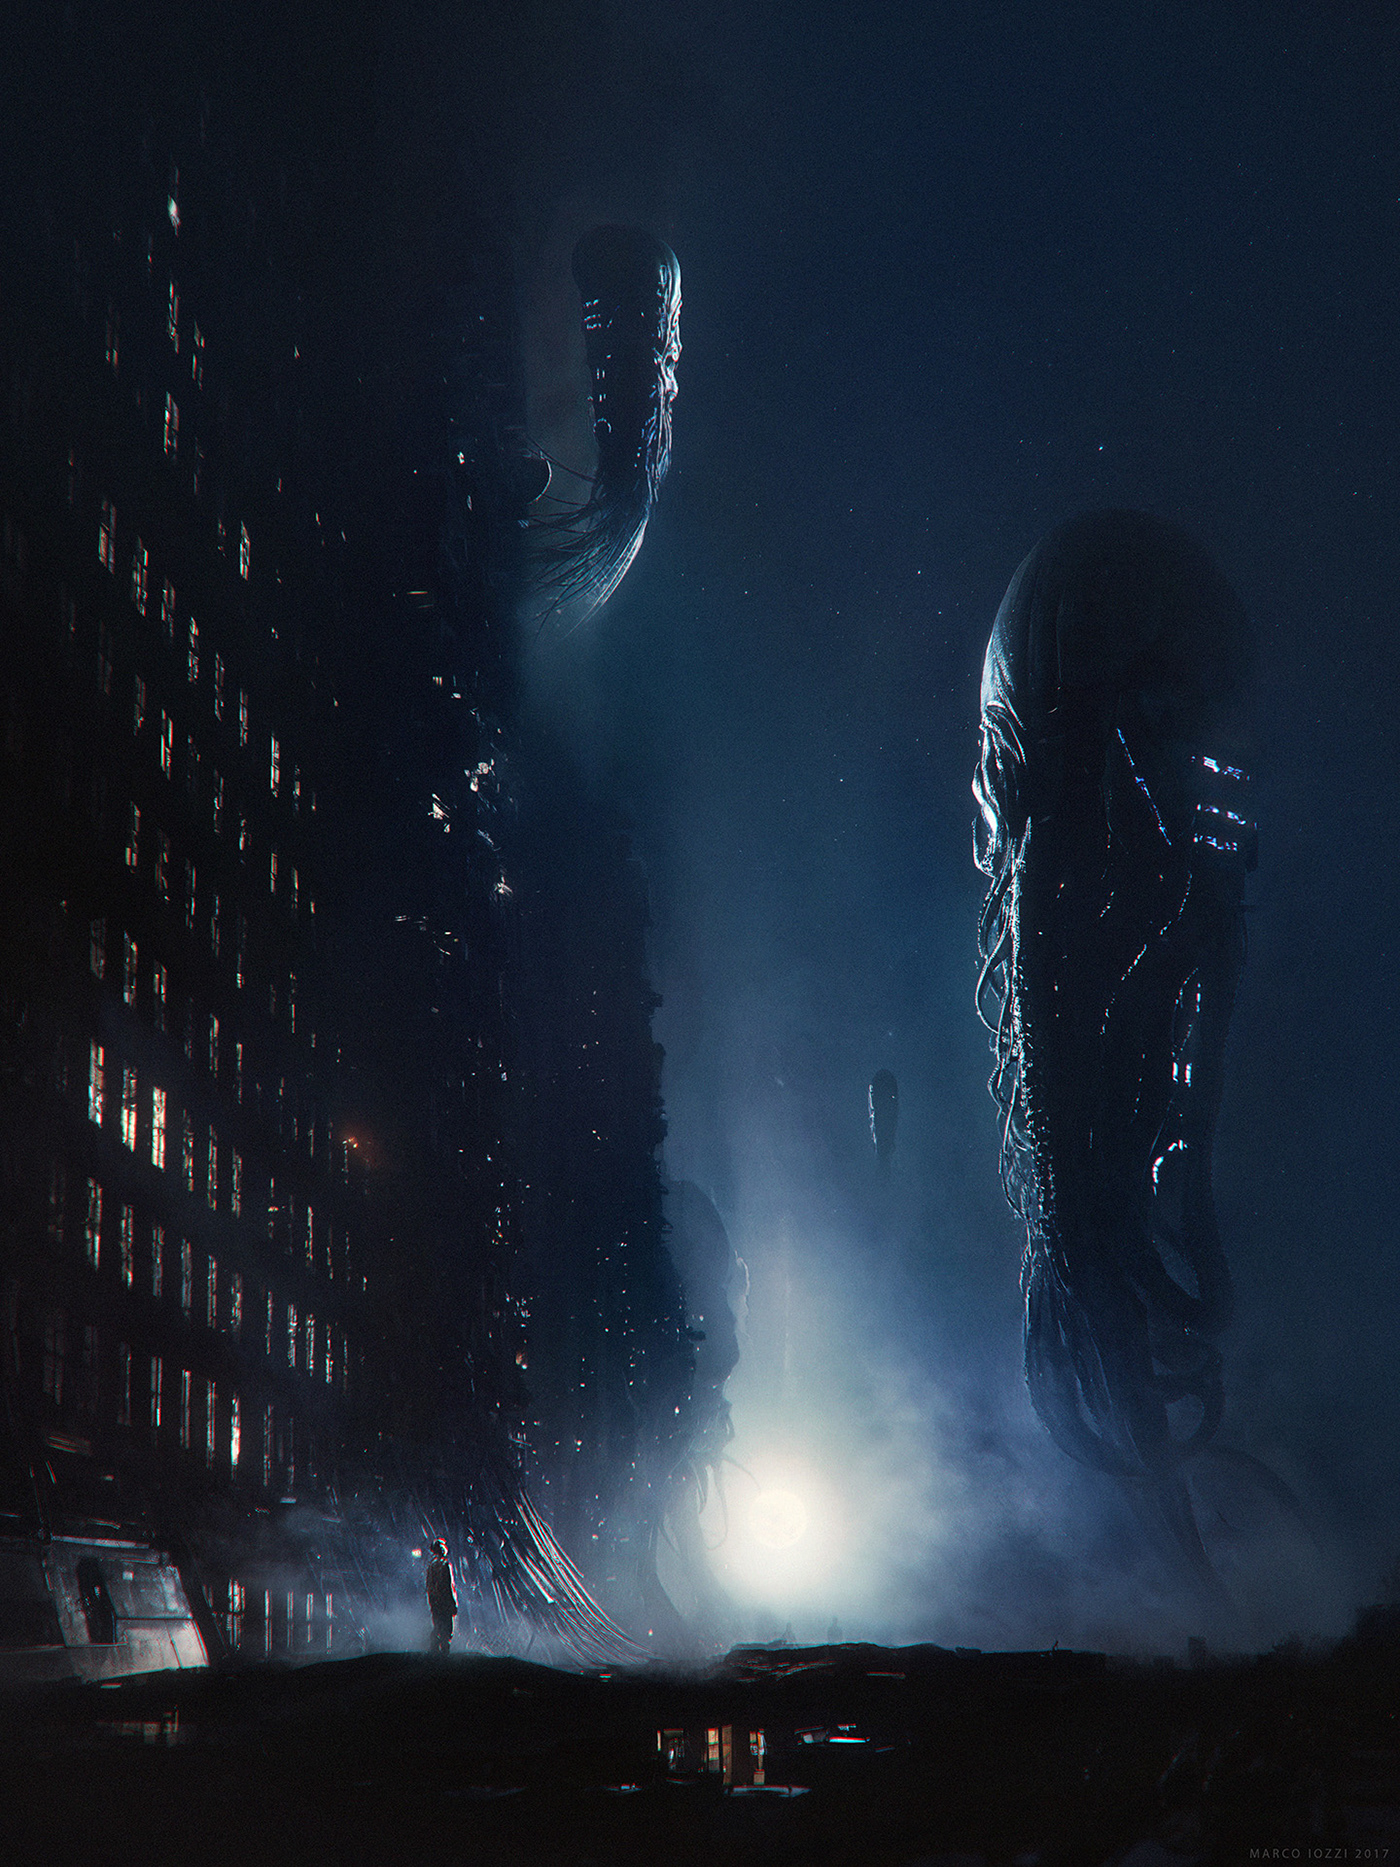 Scifi alien spaceship invasion War war of the worlds Dystopia Cyberpunk concept art digital illustration